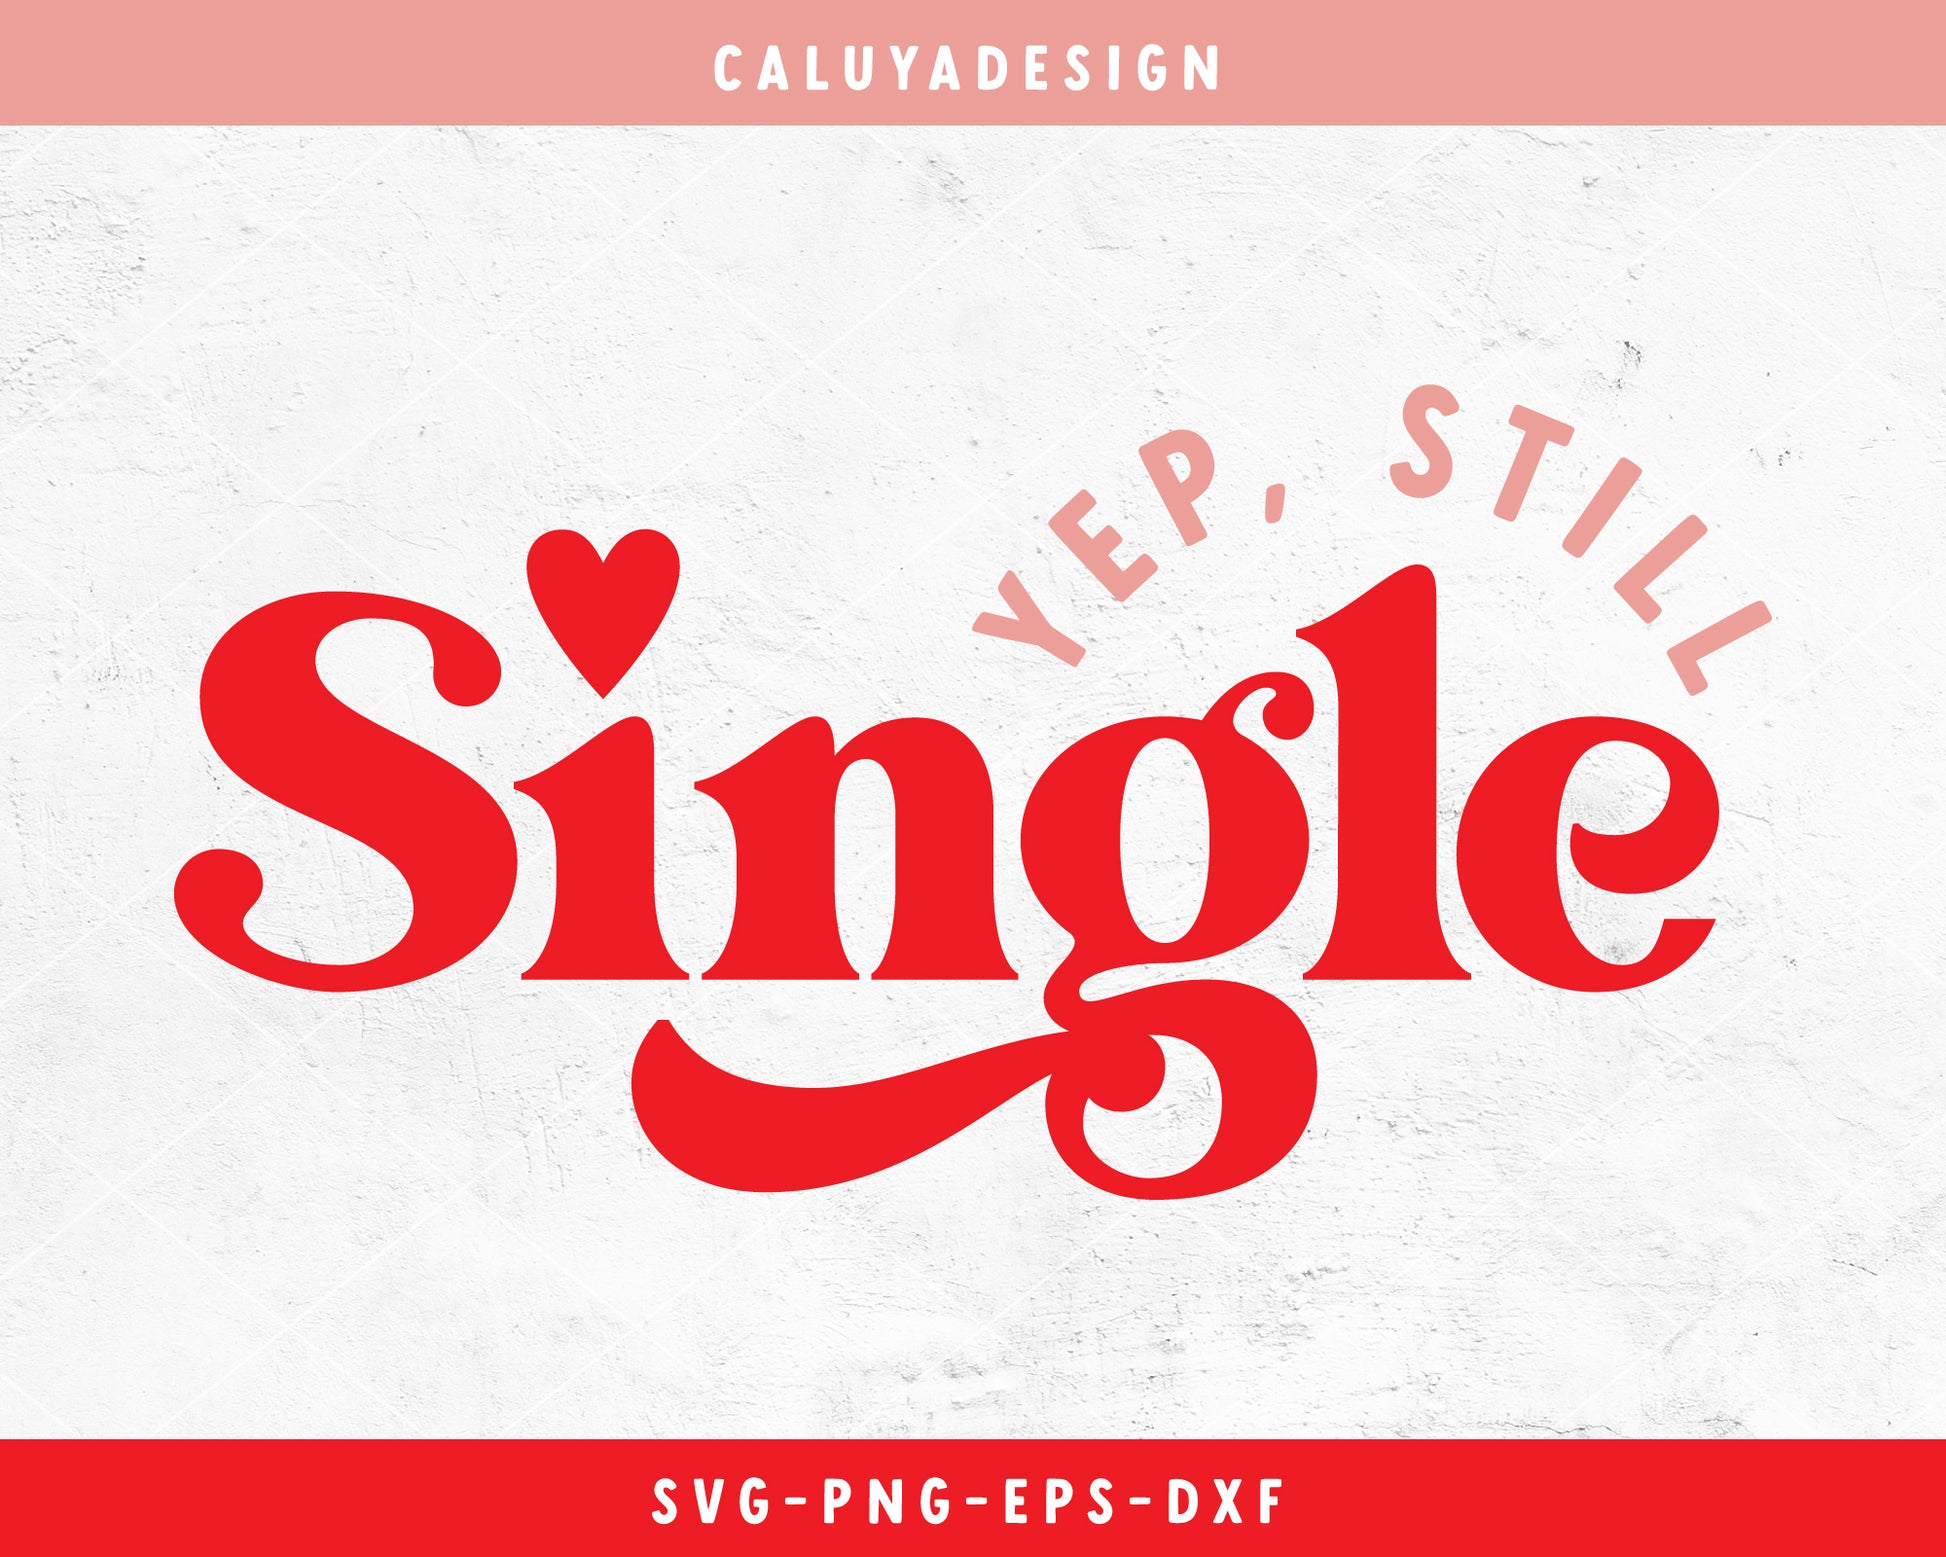 Yep, Still Single SVG Cut File for Cricut, Cameo Silhouette | Valentine's Day SVG